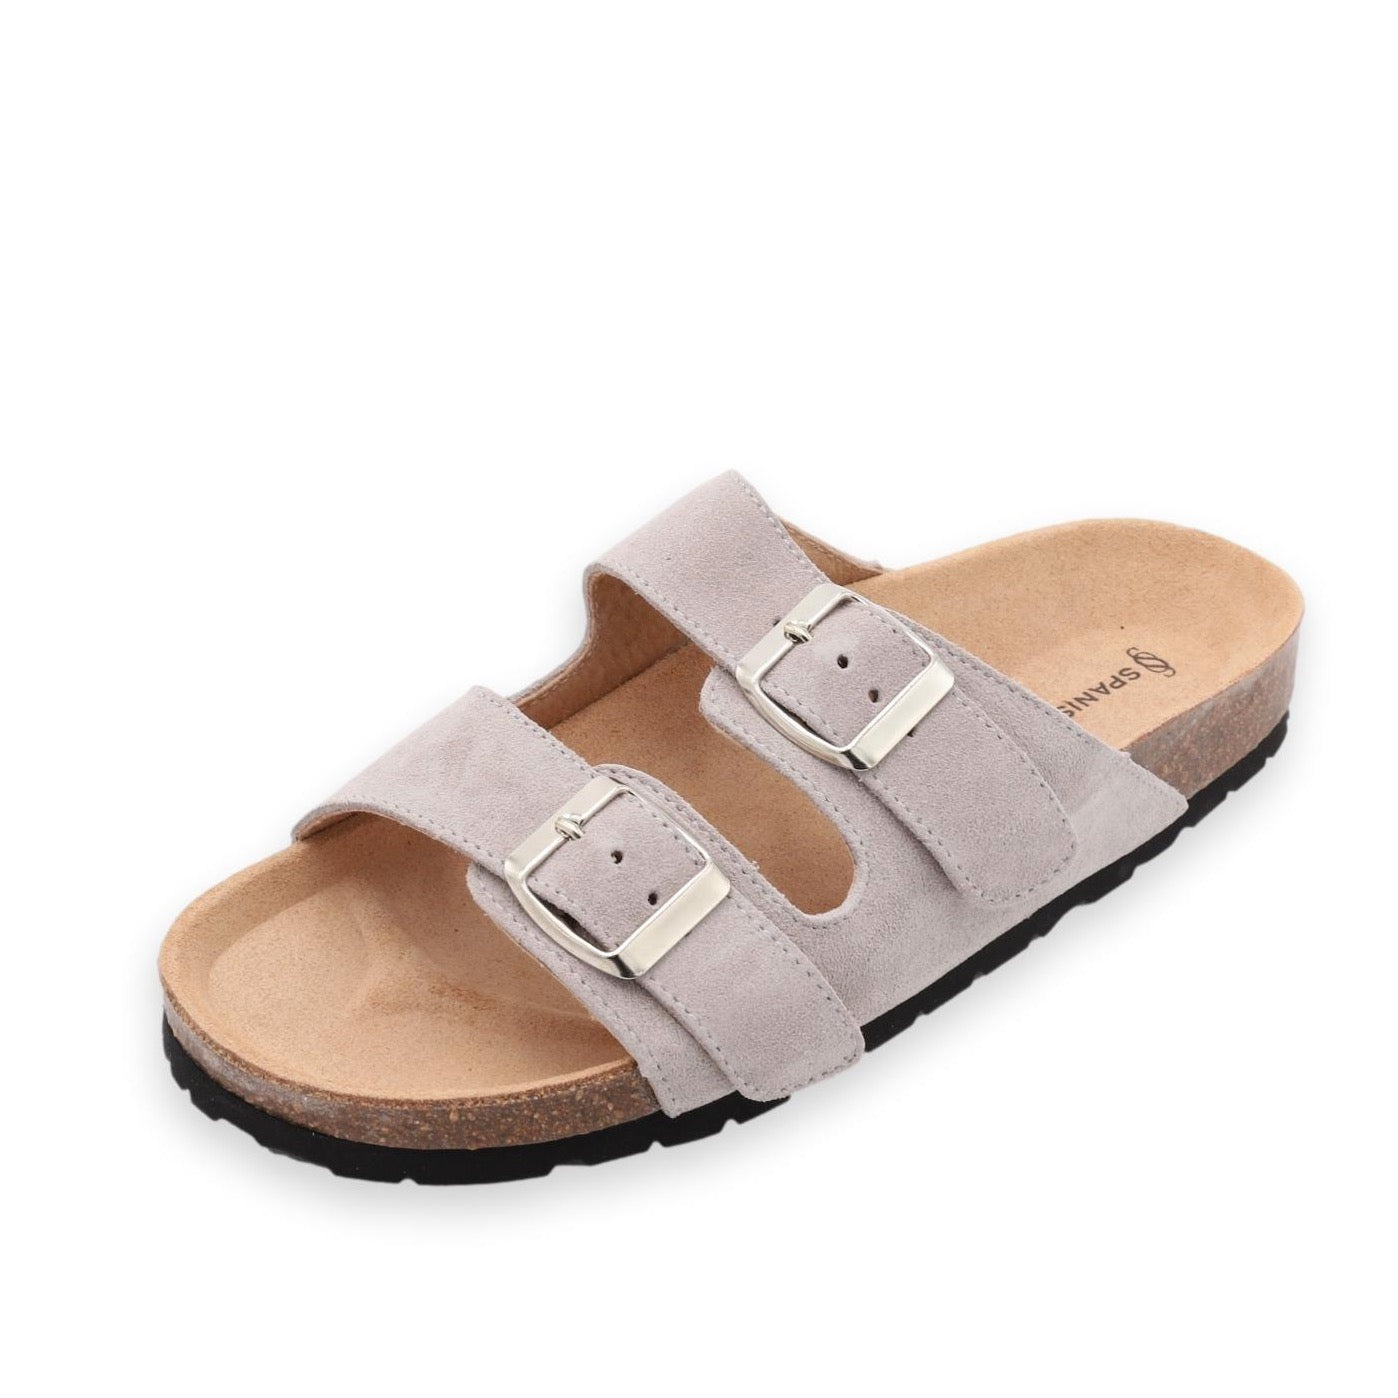 Nordic light grey sandals